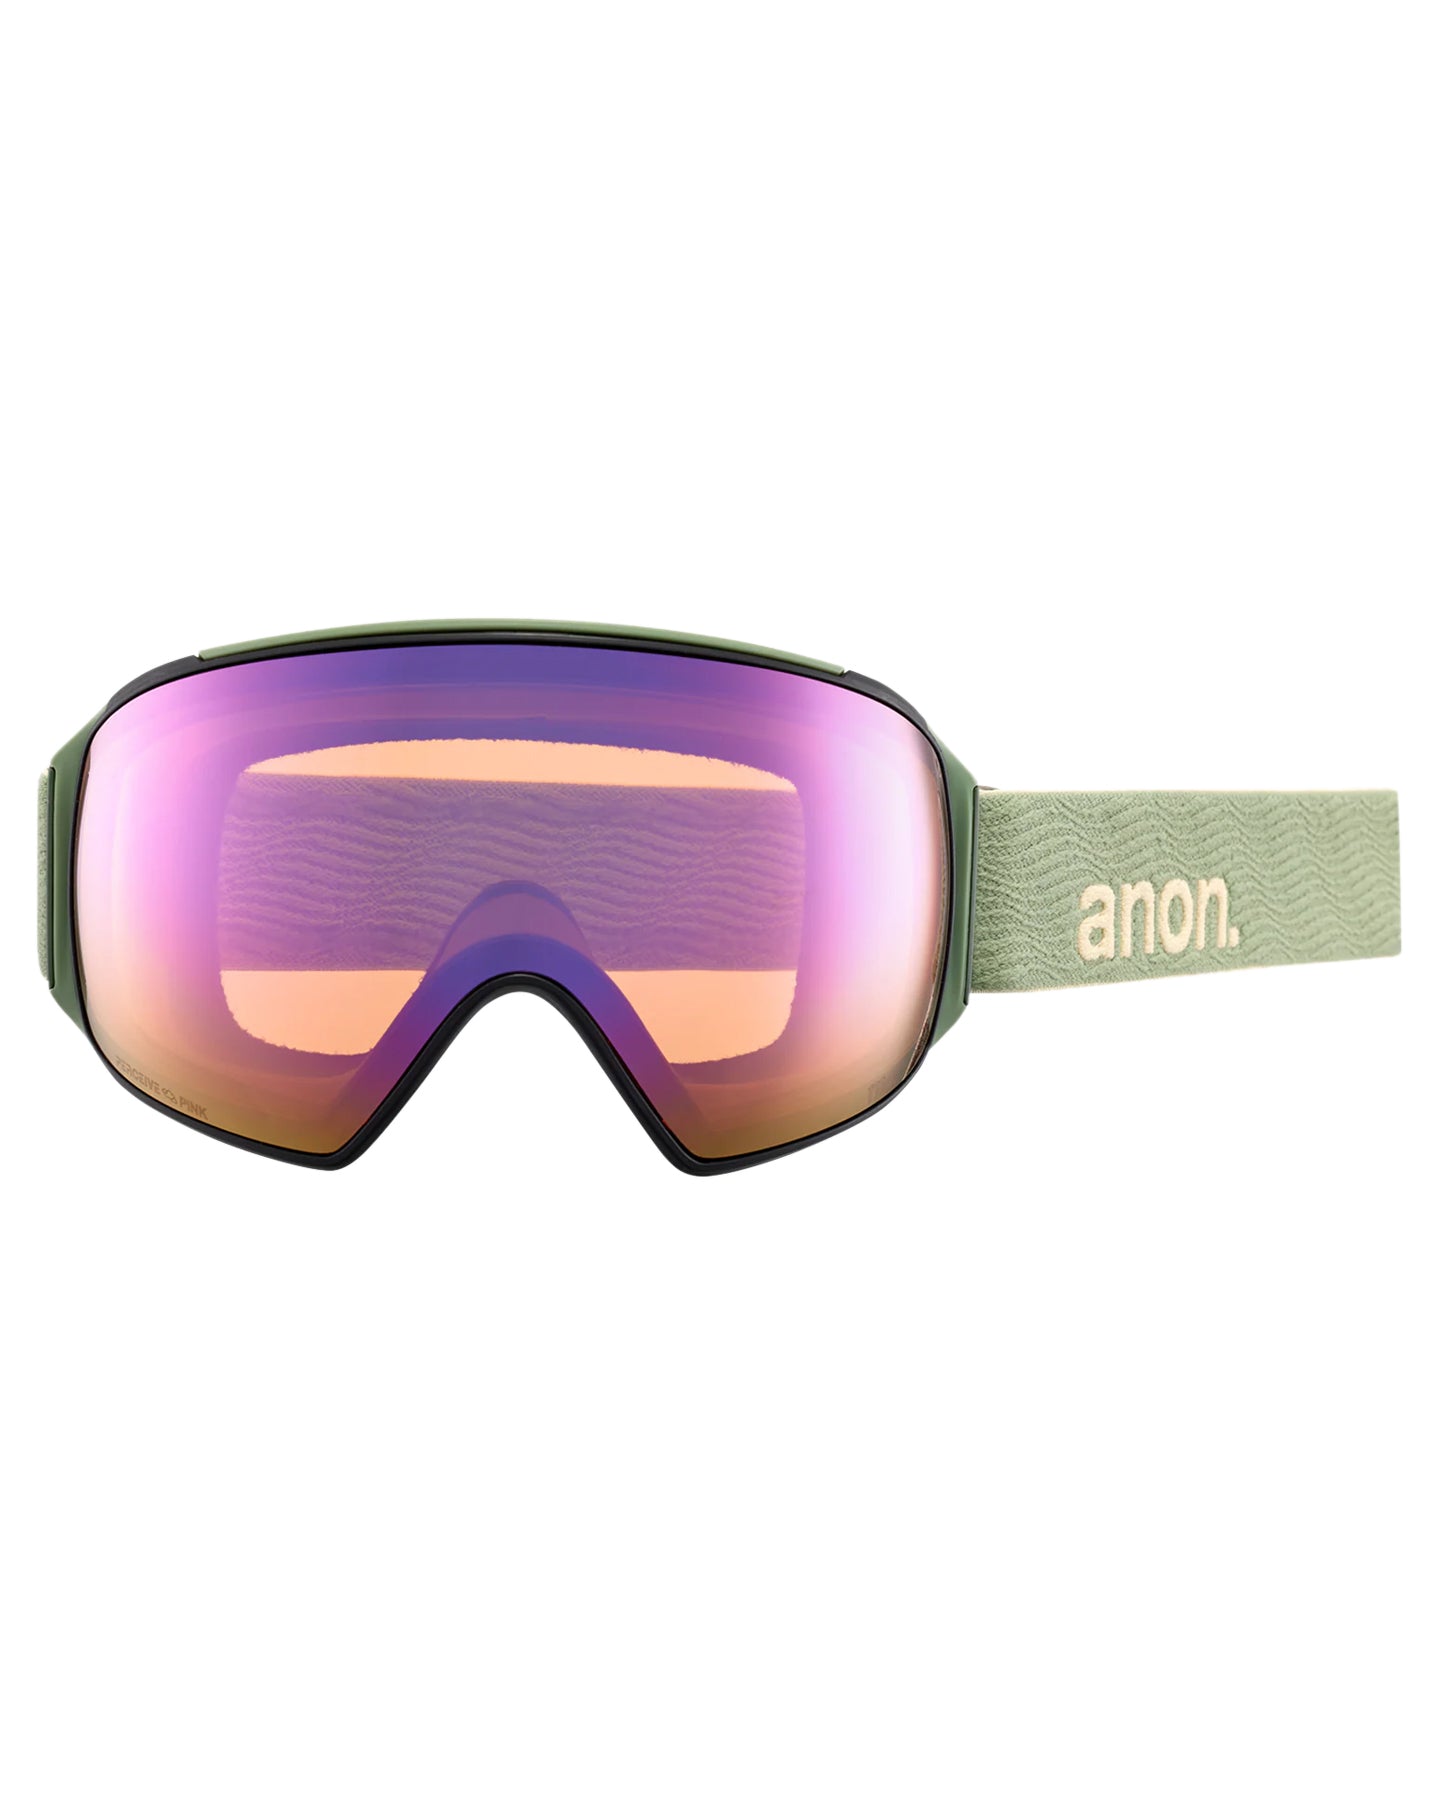 Anon M4 Toric Snow Goggles + Bonus Lens + Mfi® Face Mask - Hedge/Perceive Variable Green Lens Men's Snow Goggles - Trojan Wake Ski Snow